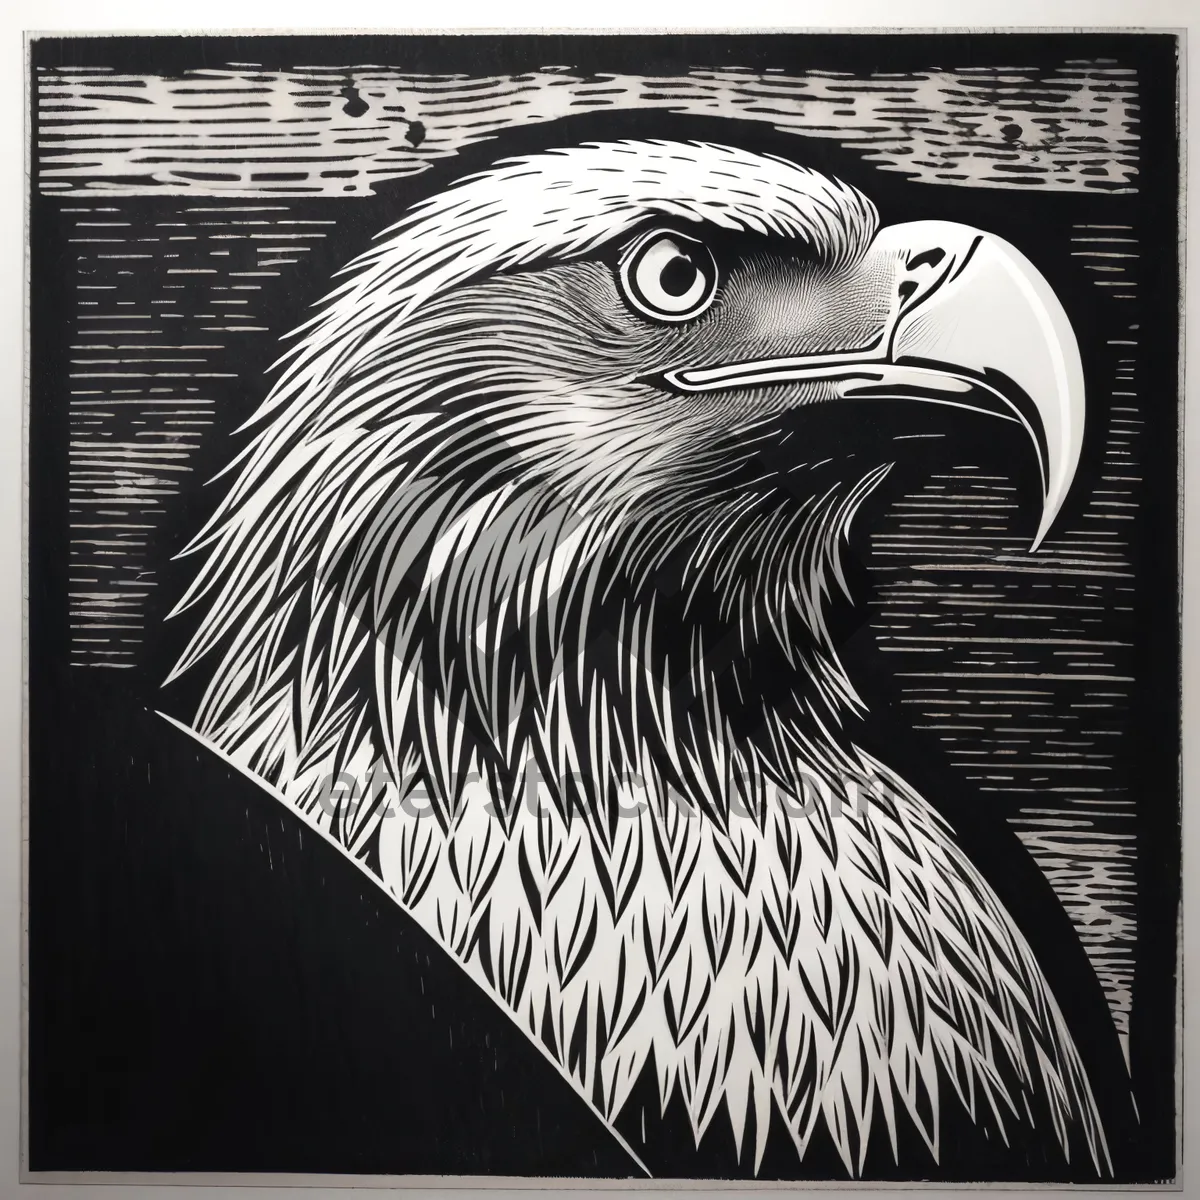 Picture of Close-up Portrait of Wild Eagle's Beak